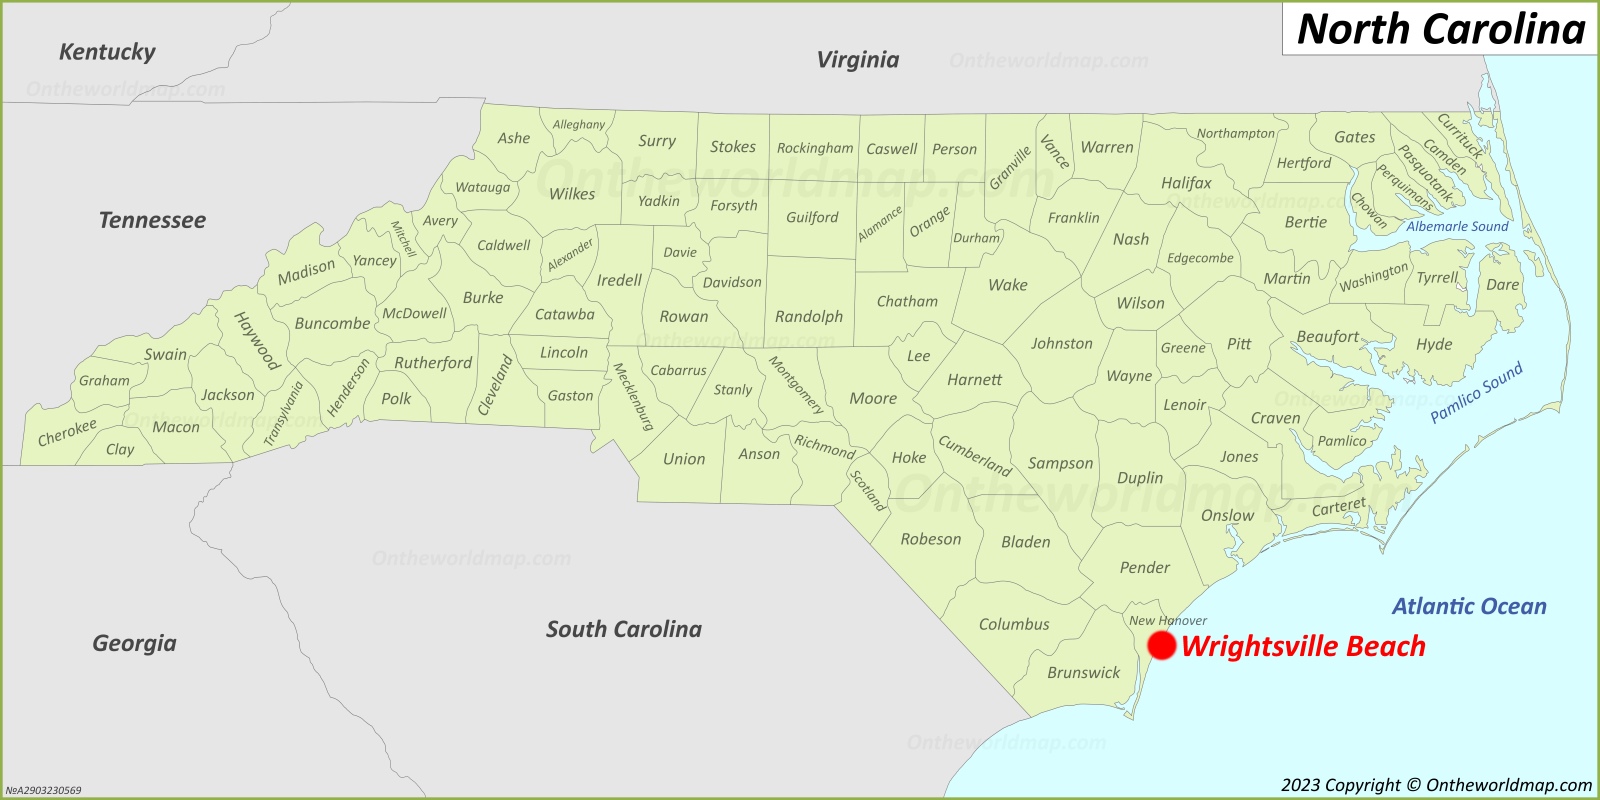 Wrightsville Beach Location On The North Carolina Map